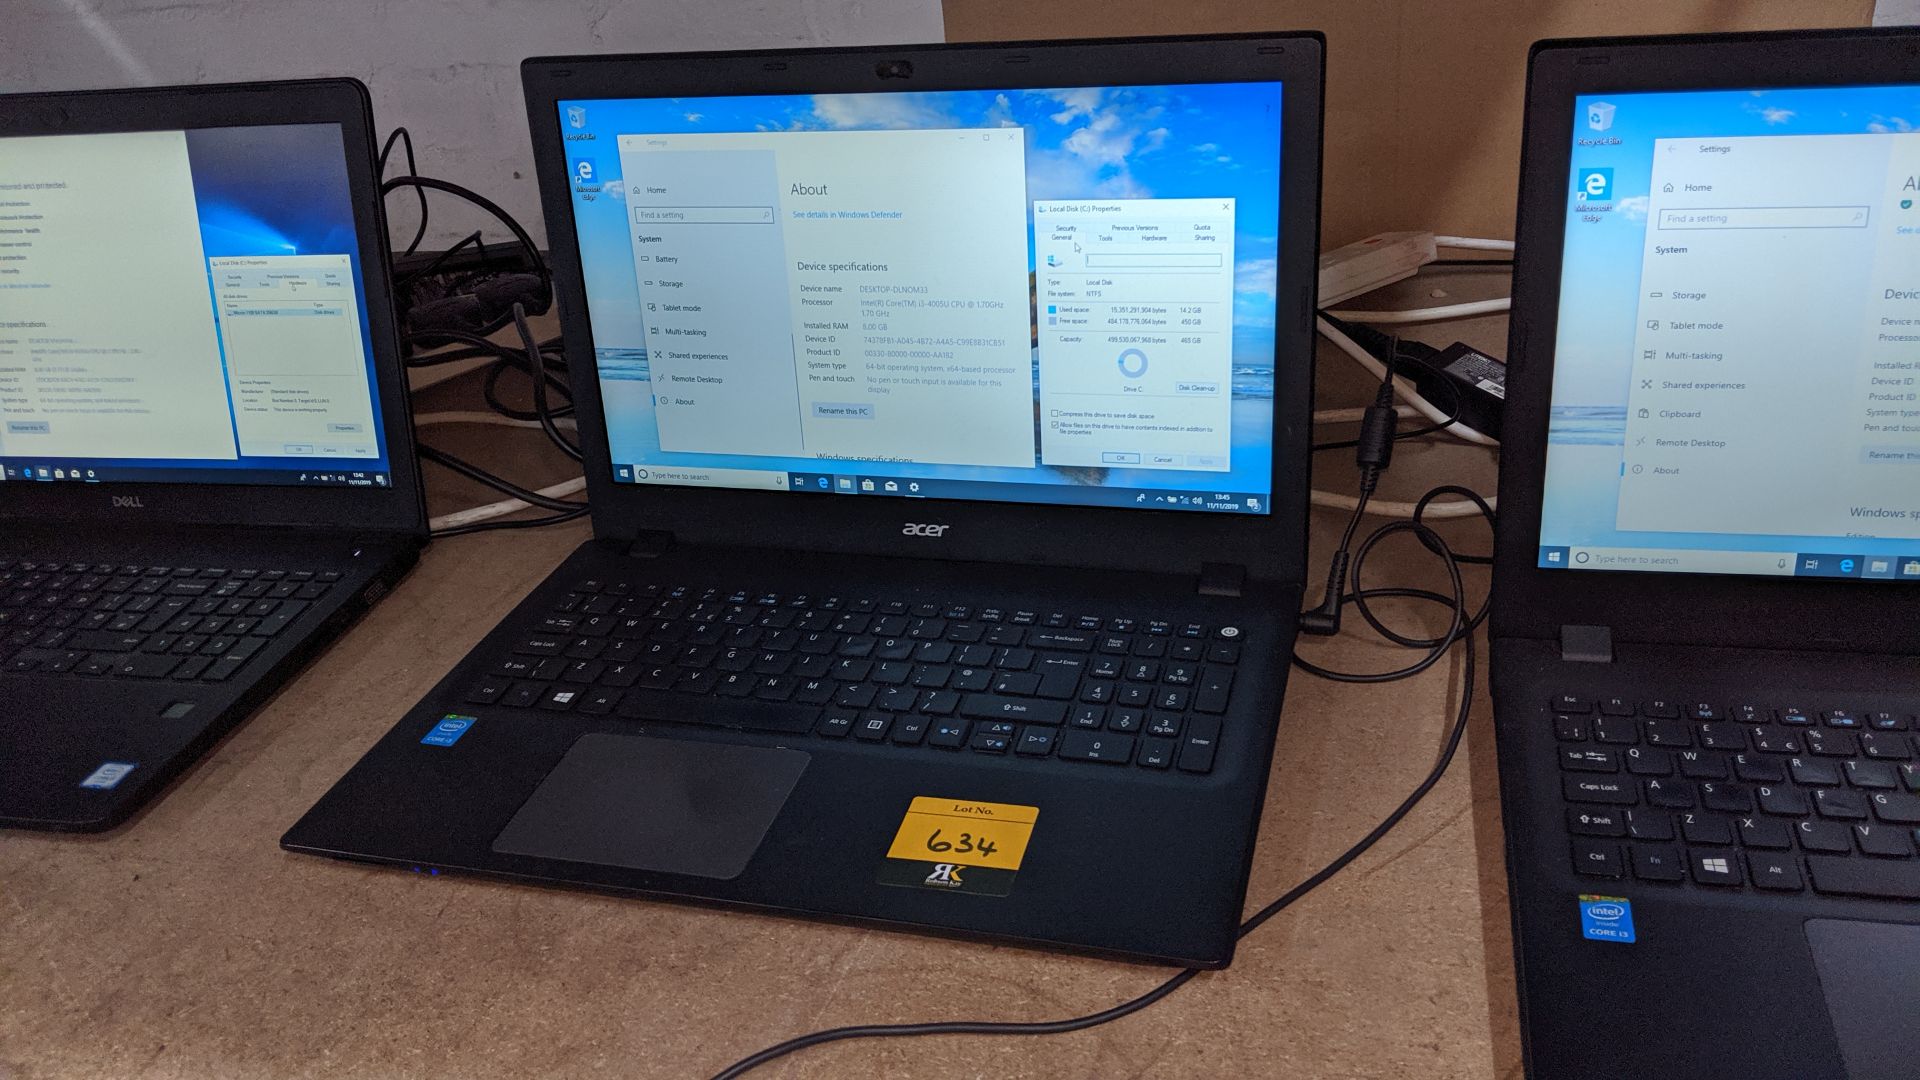 Acer TravelMate P257 Series notebook computer, Intel Core i3-4005u CPU @1.7GHz, 8Gb RAM, 500Gb - Image 4 of 7